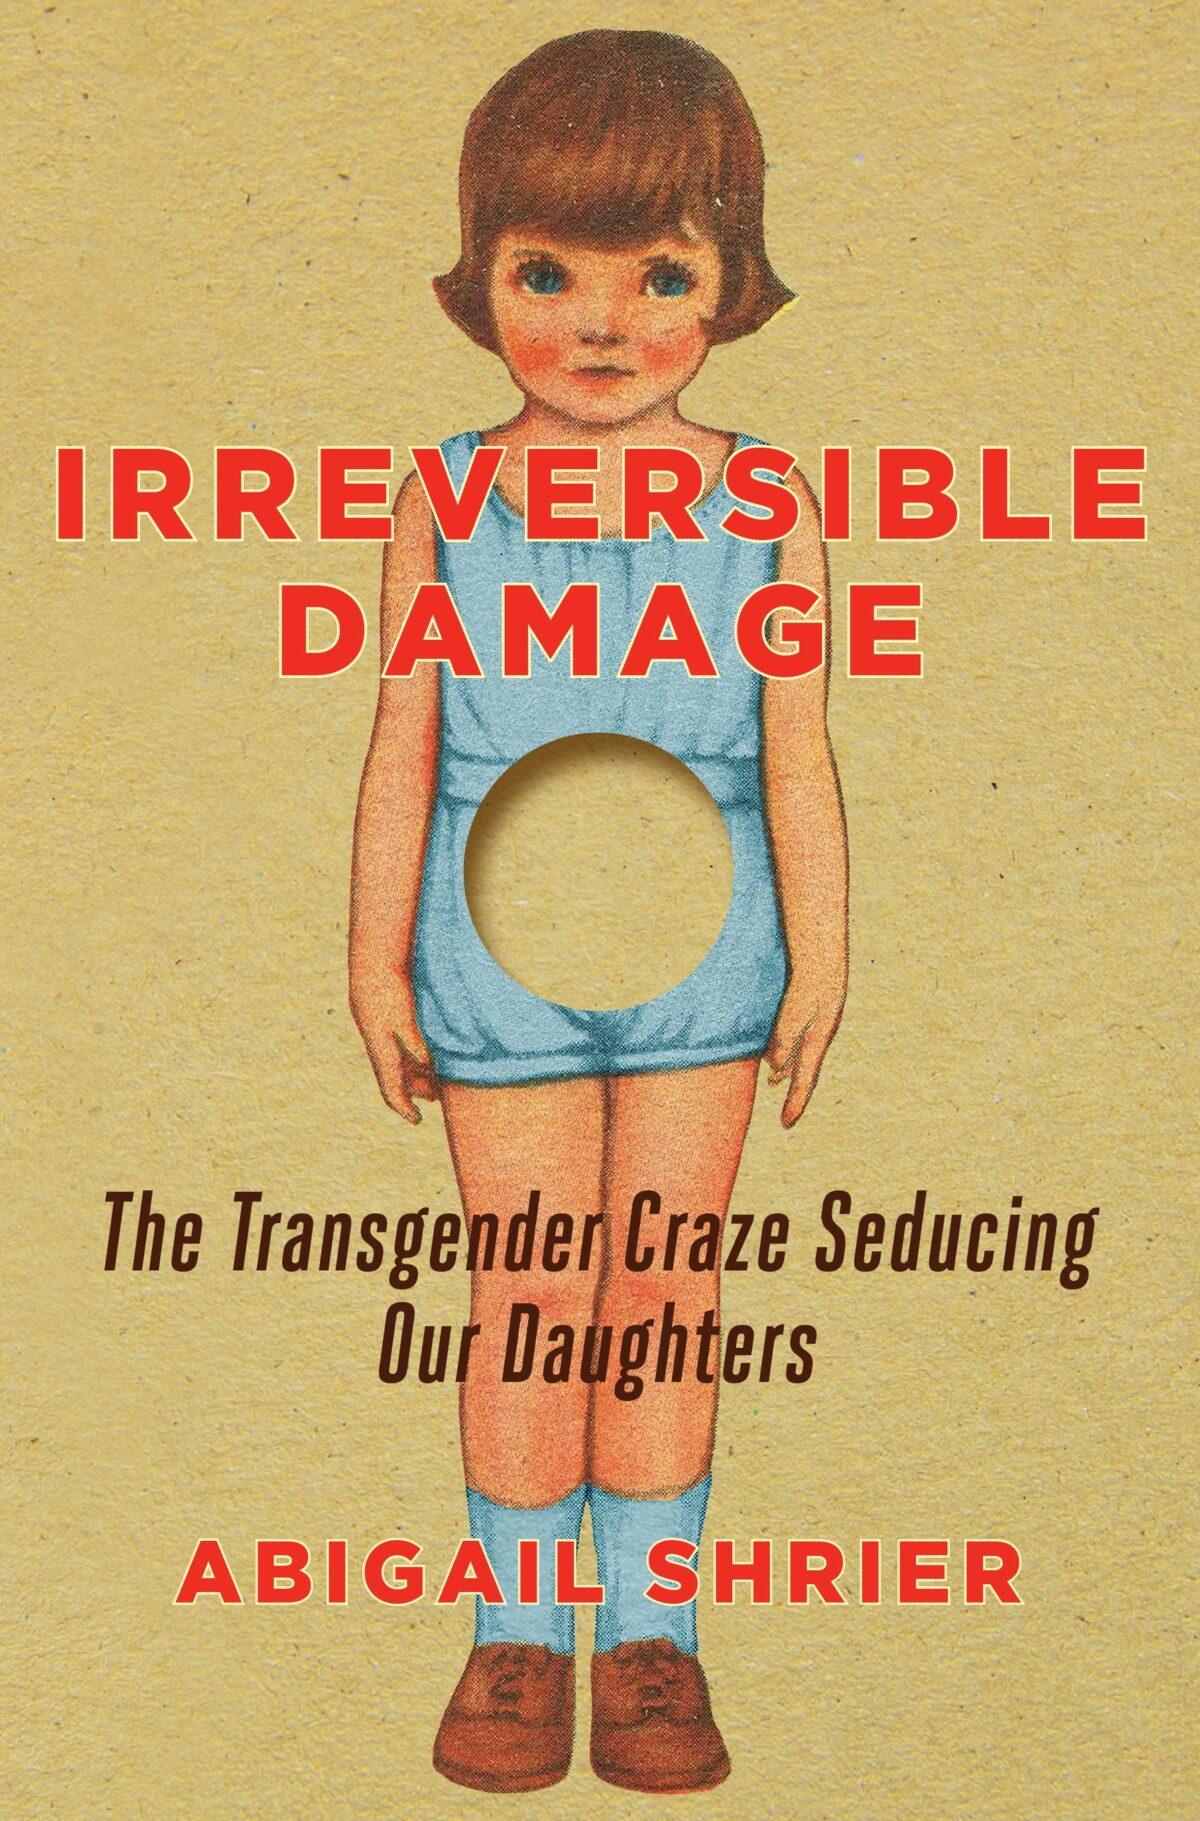 Cover of "Irreversible Damage: The Transgender Craze Seducing Our Daughters" by Abigail Shrier. (Abigail Shrier)